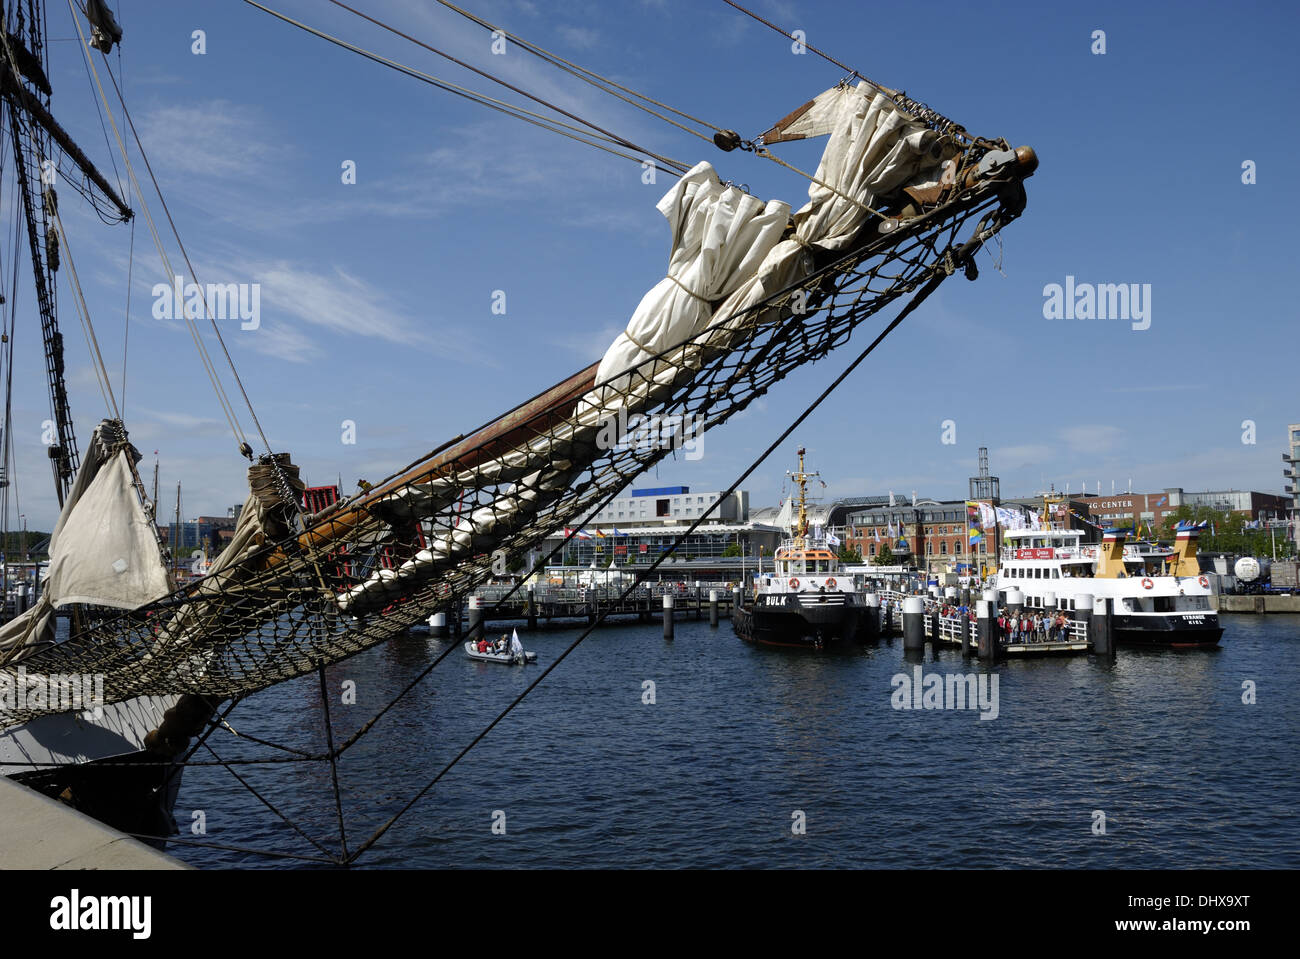 Jib-boom on a sailing ship in Kiel Stock Photo